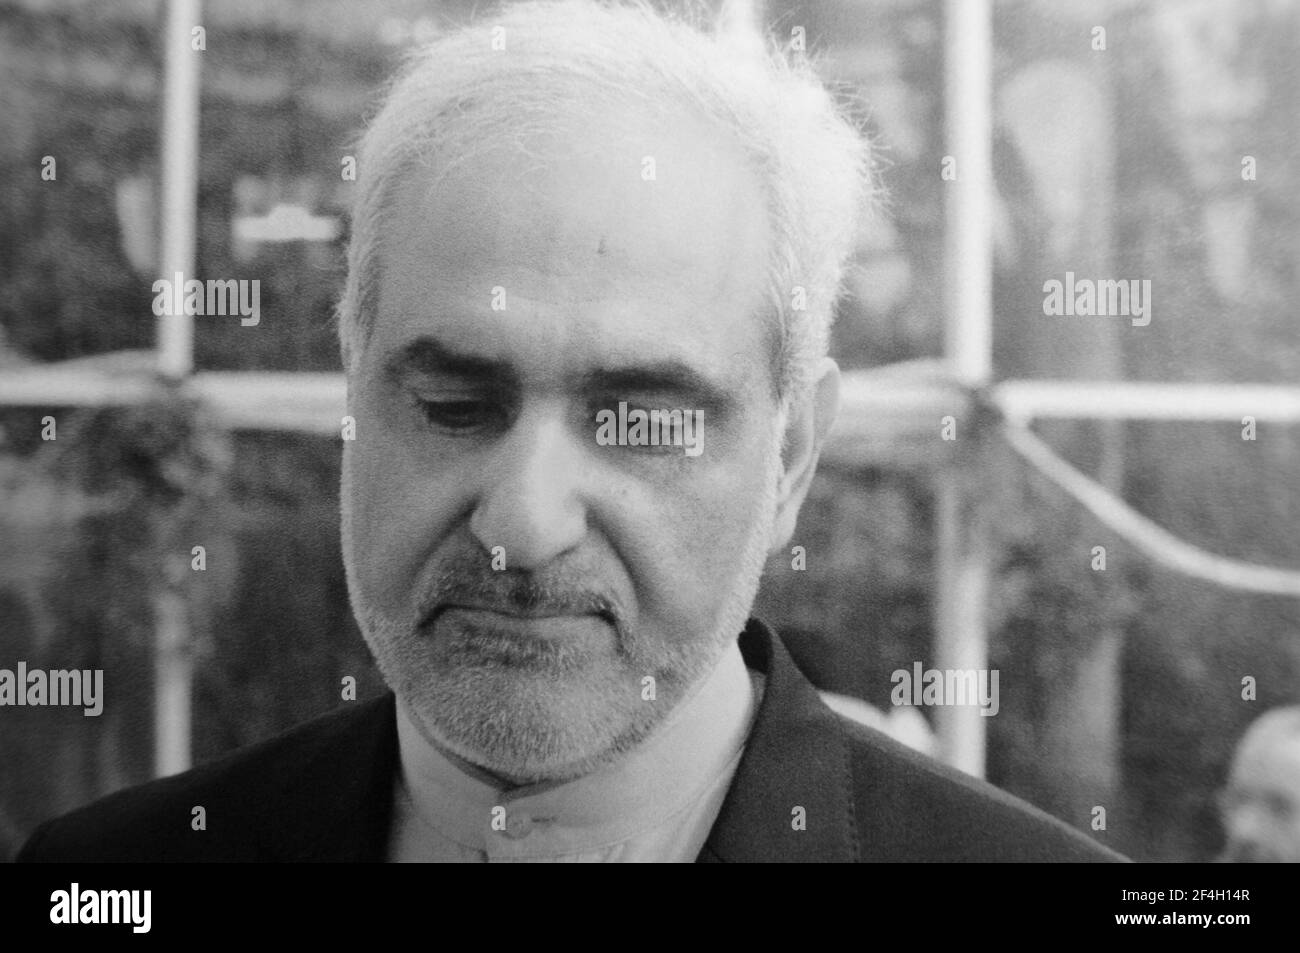 Switzerland: The Iranian embassador Alireza Salari in Bern invited Irans Foreign Minister Mohammed Dschawad Sarif ( محمد جواد ظریف پیرانشهری ) to the Stock Photo